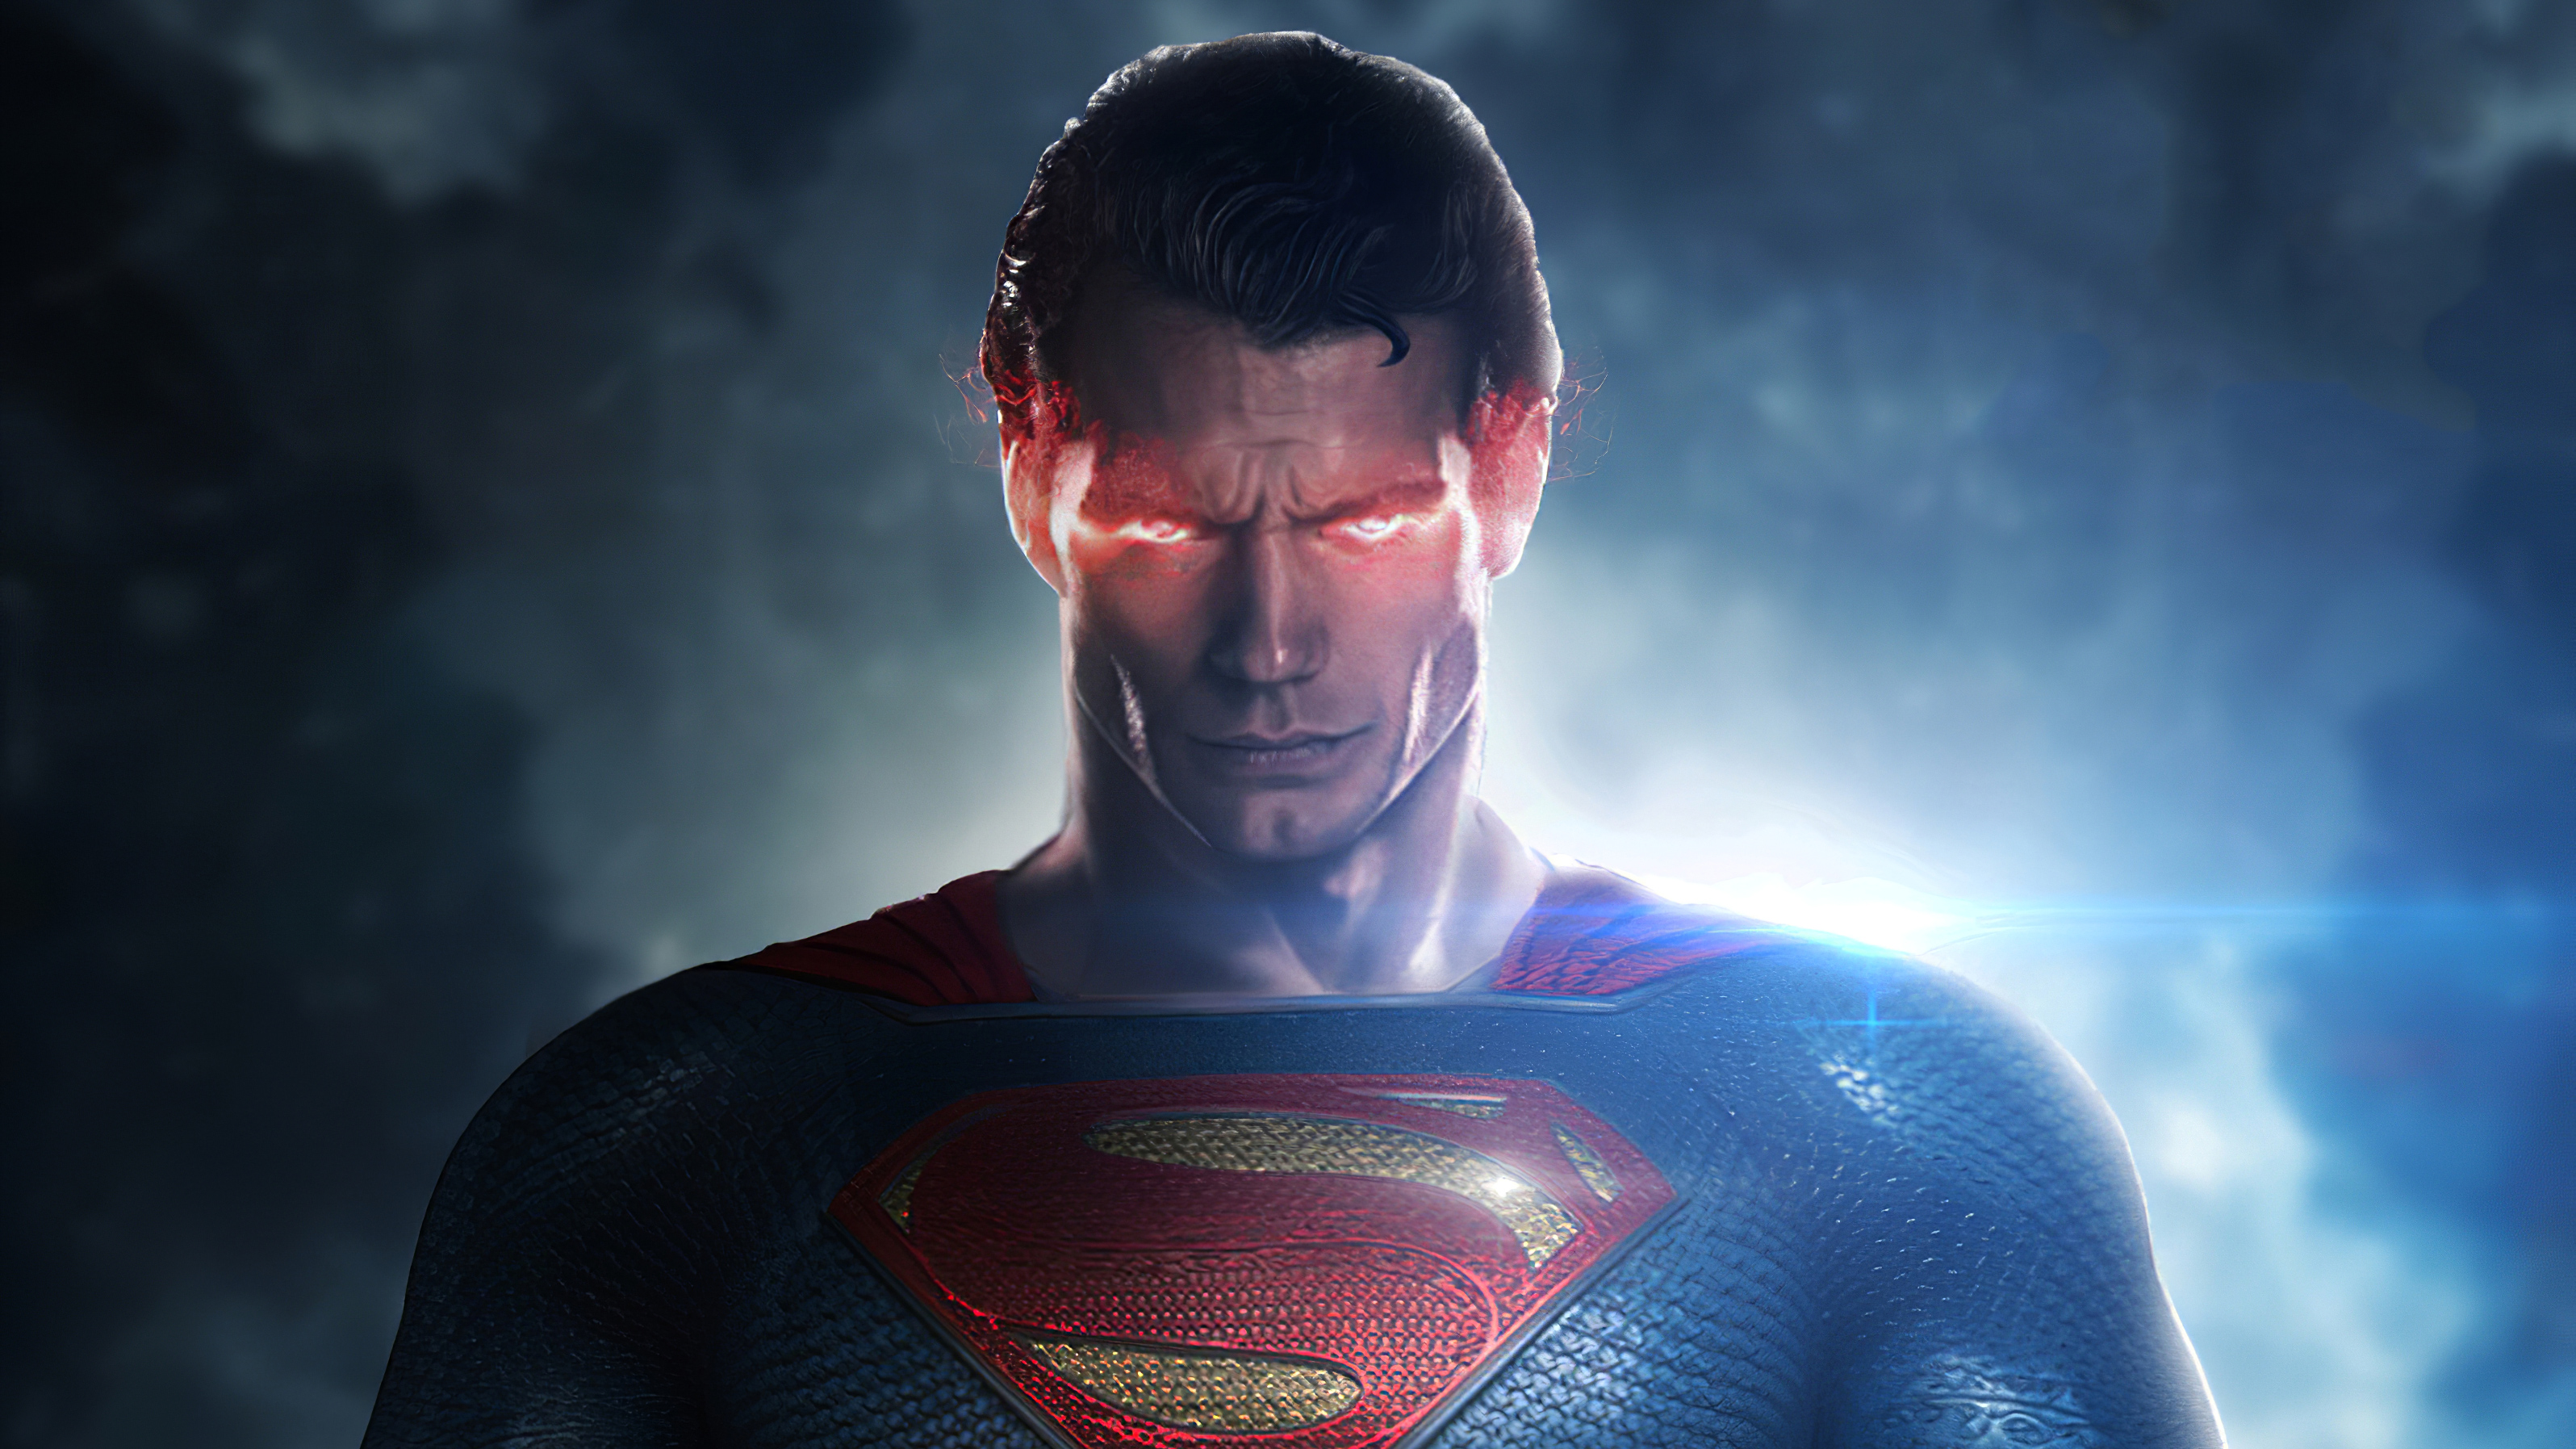 Descarga gratuita de fondo de pantalla para móvil de Superhombre, El Hombre De Acero, Películas, Dc Comics, Henry Cavill.